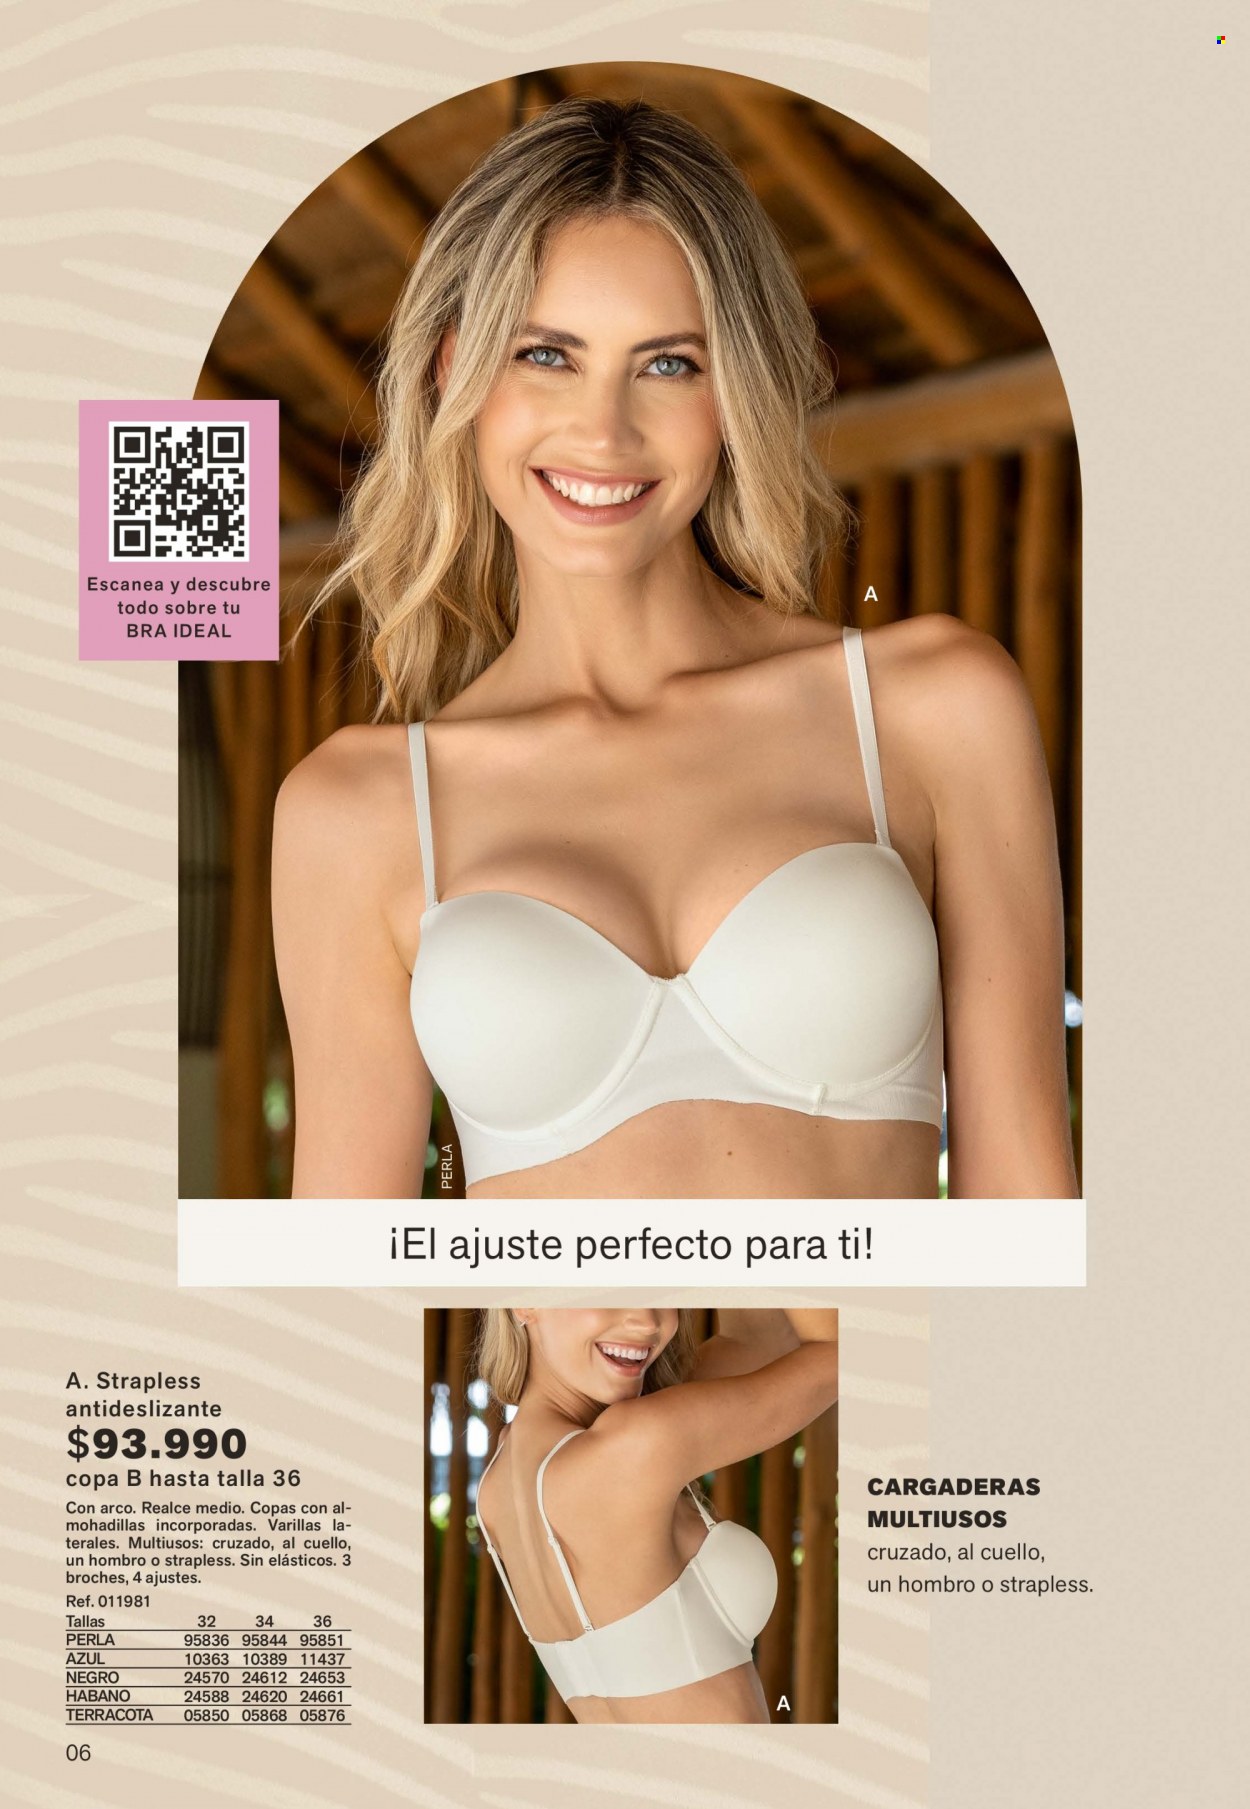 Catálogo Leonisa - 05.16.2022 - 06.02.2022.